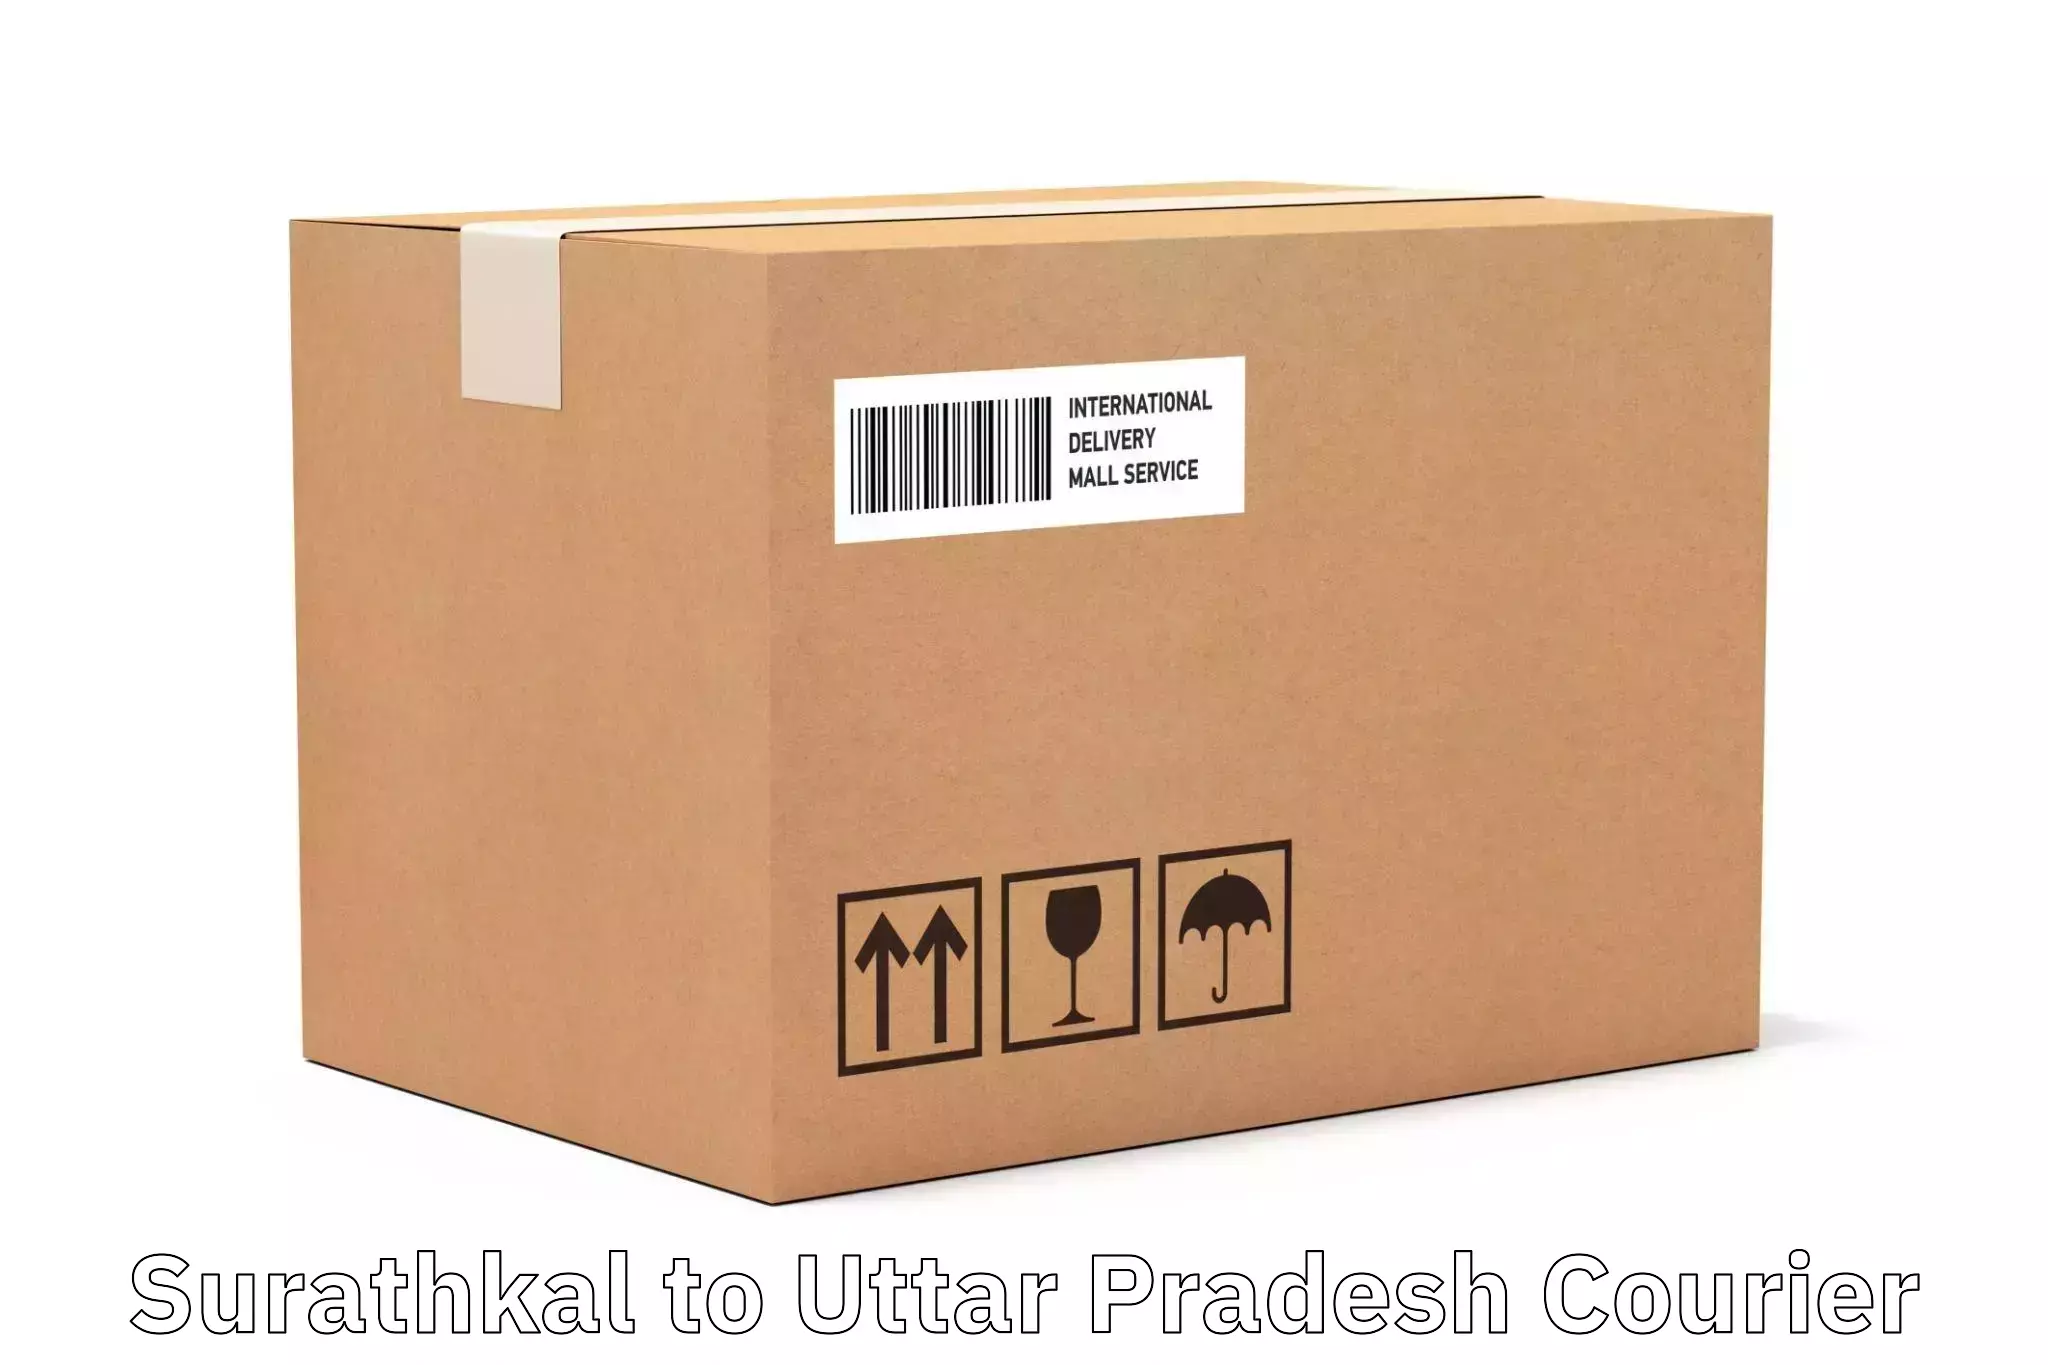 Express courier capabilities Surathkal to Uttar Pradesh